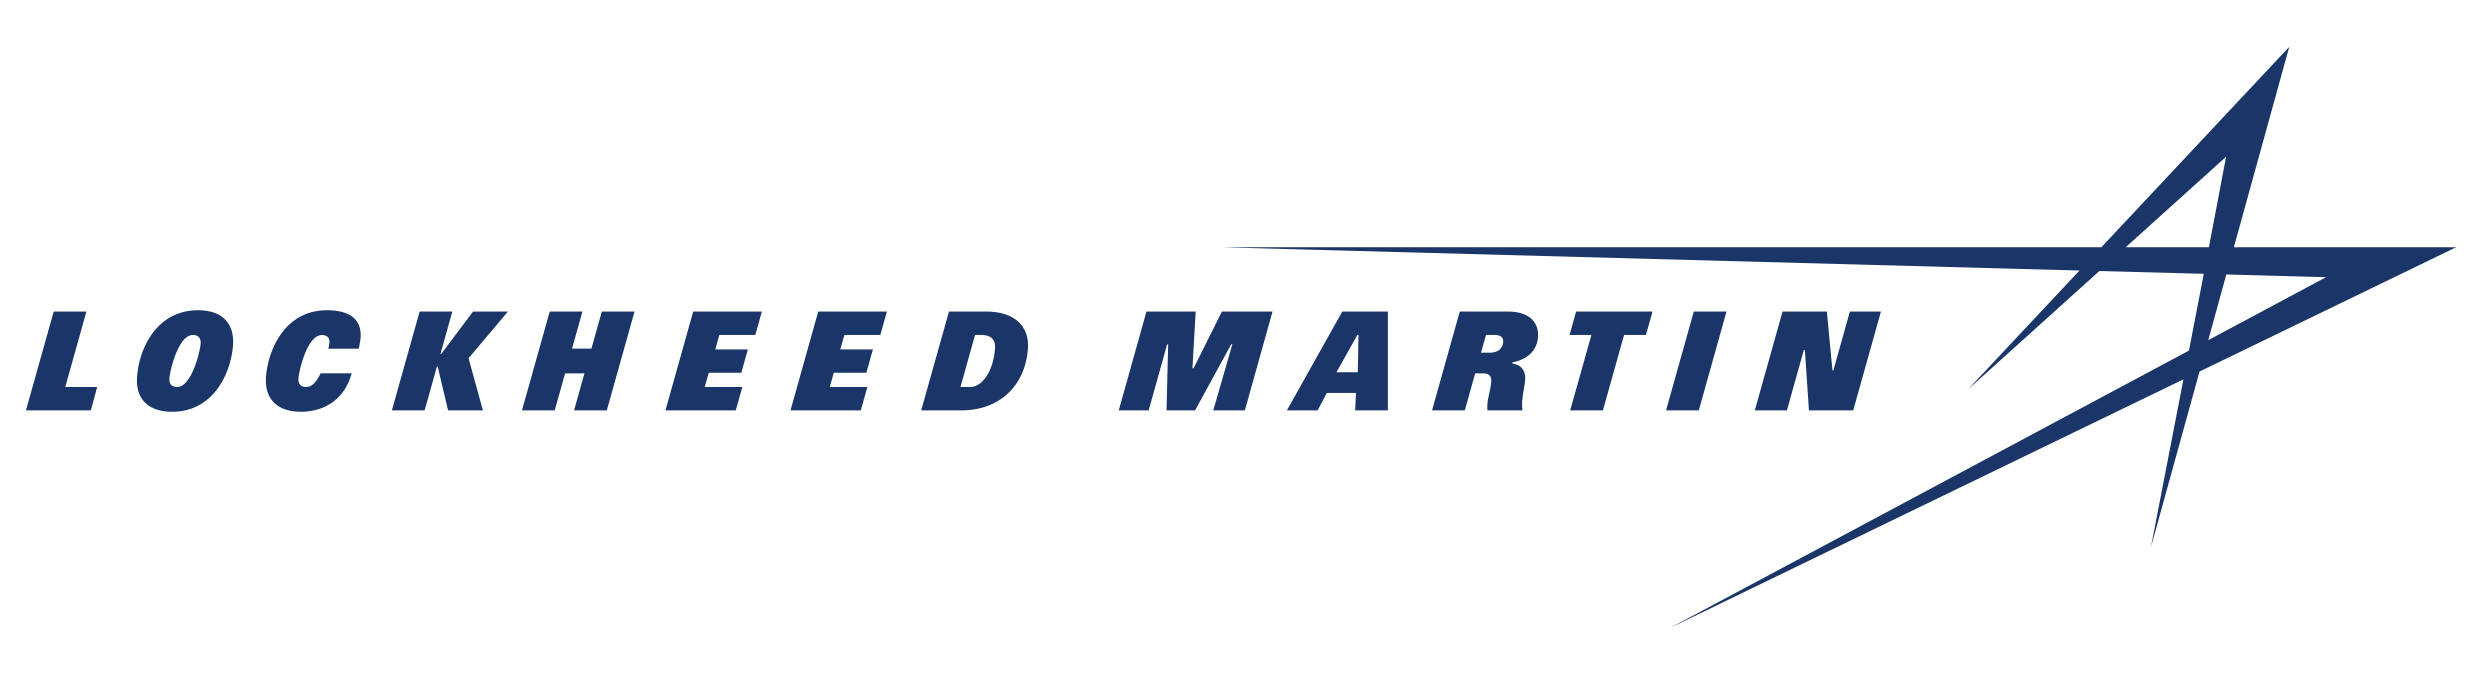 Lockheed martin wybiera szkolenia marki Delta Training